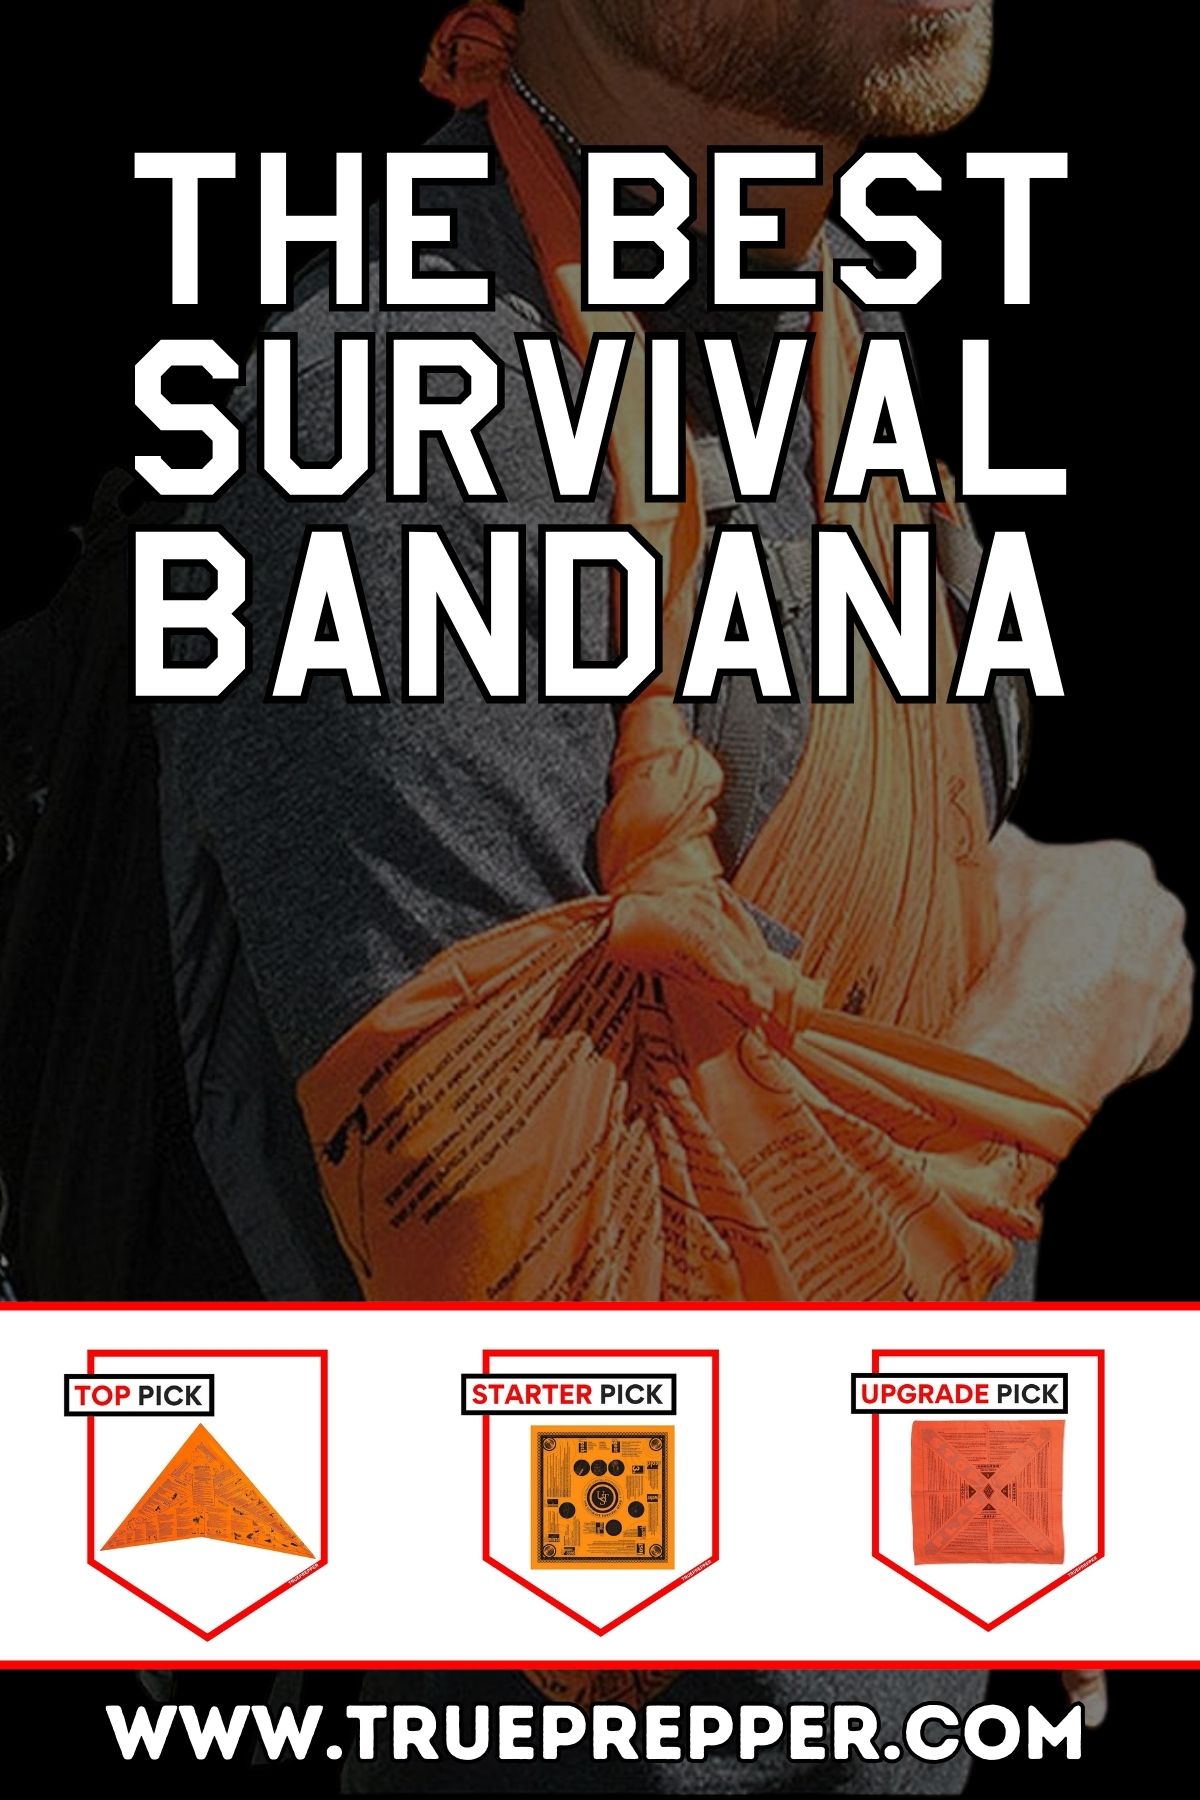 The Best Survival Bandana